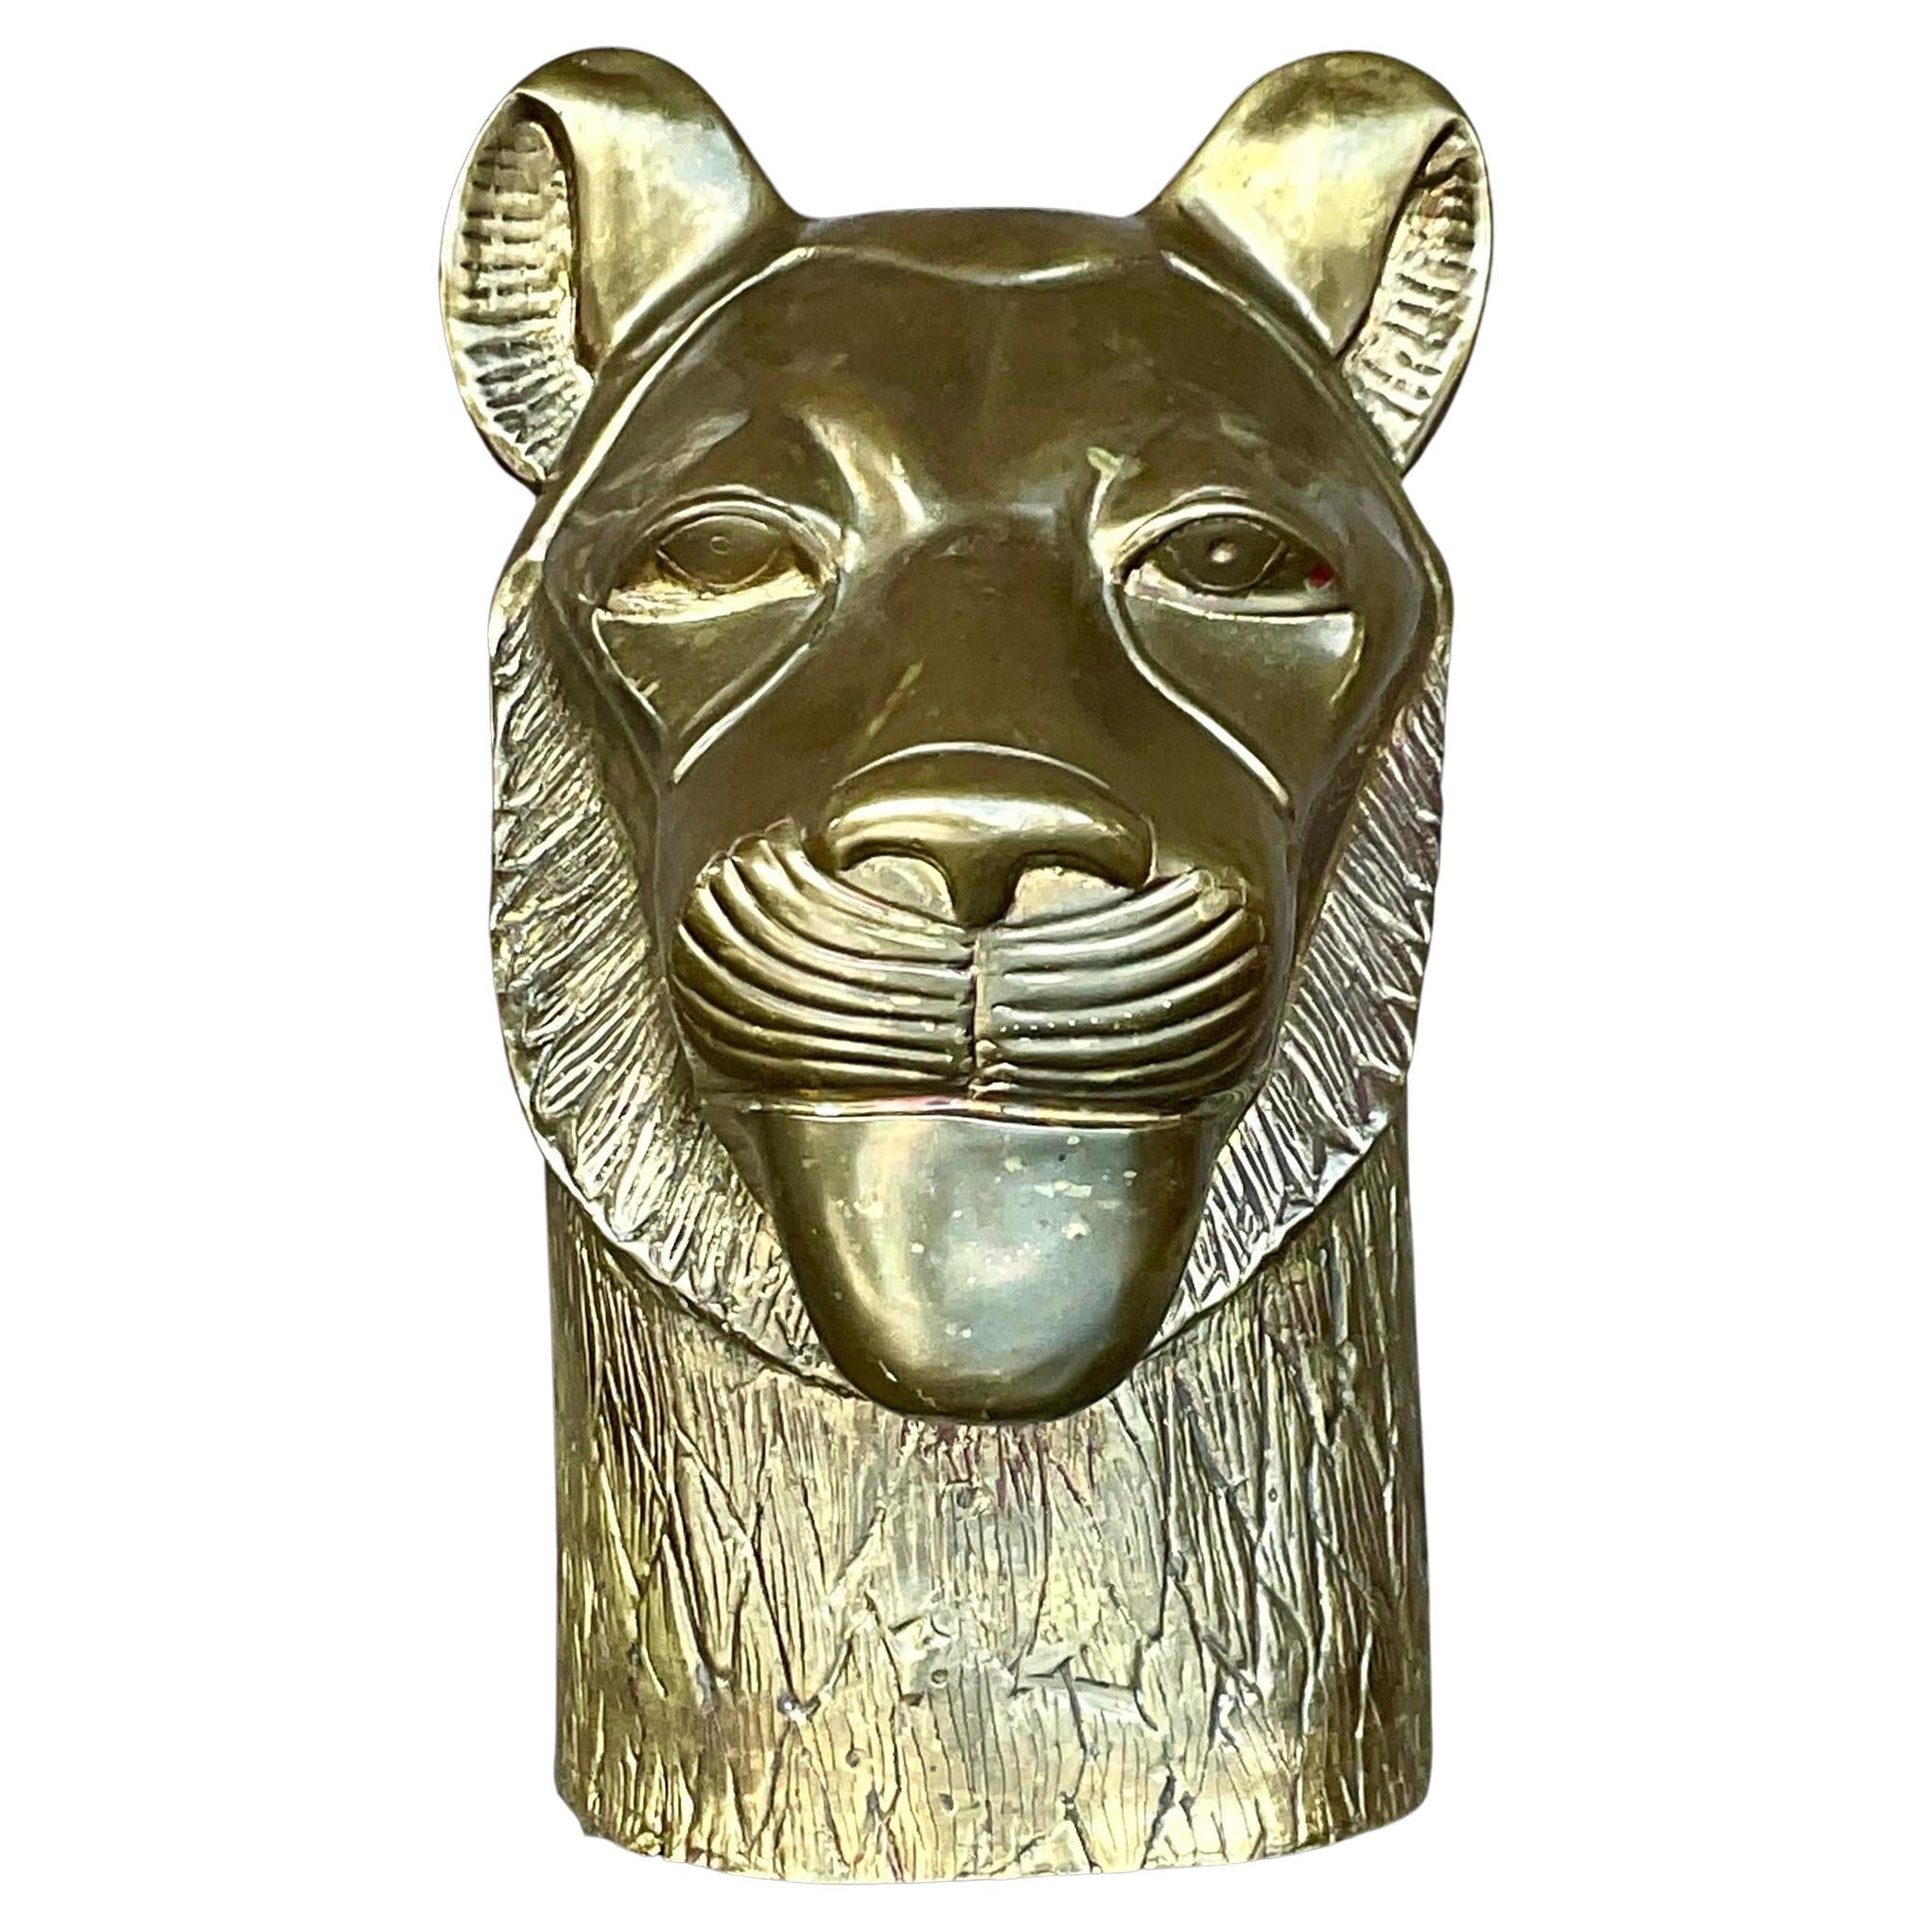 Vintage Chapman Brass Lioness Head Sculpture